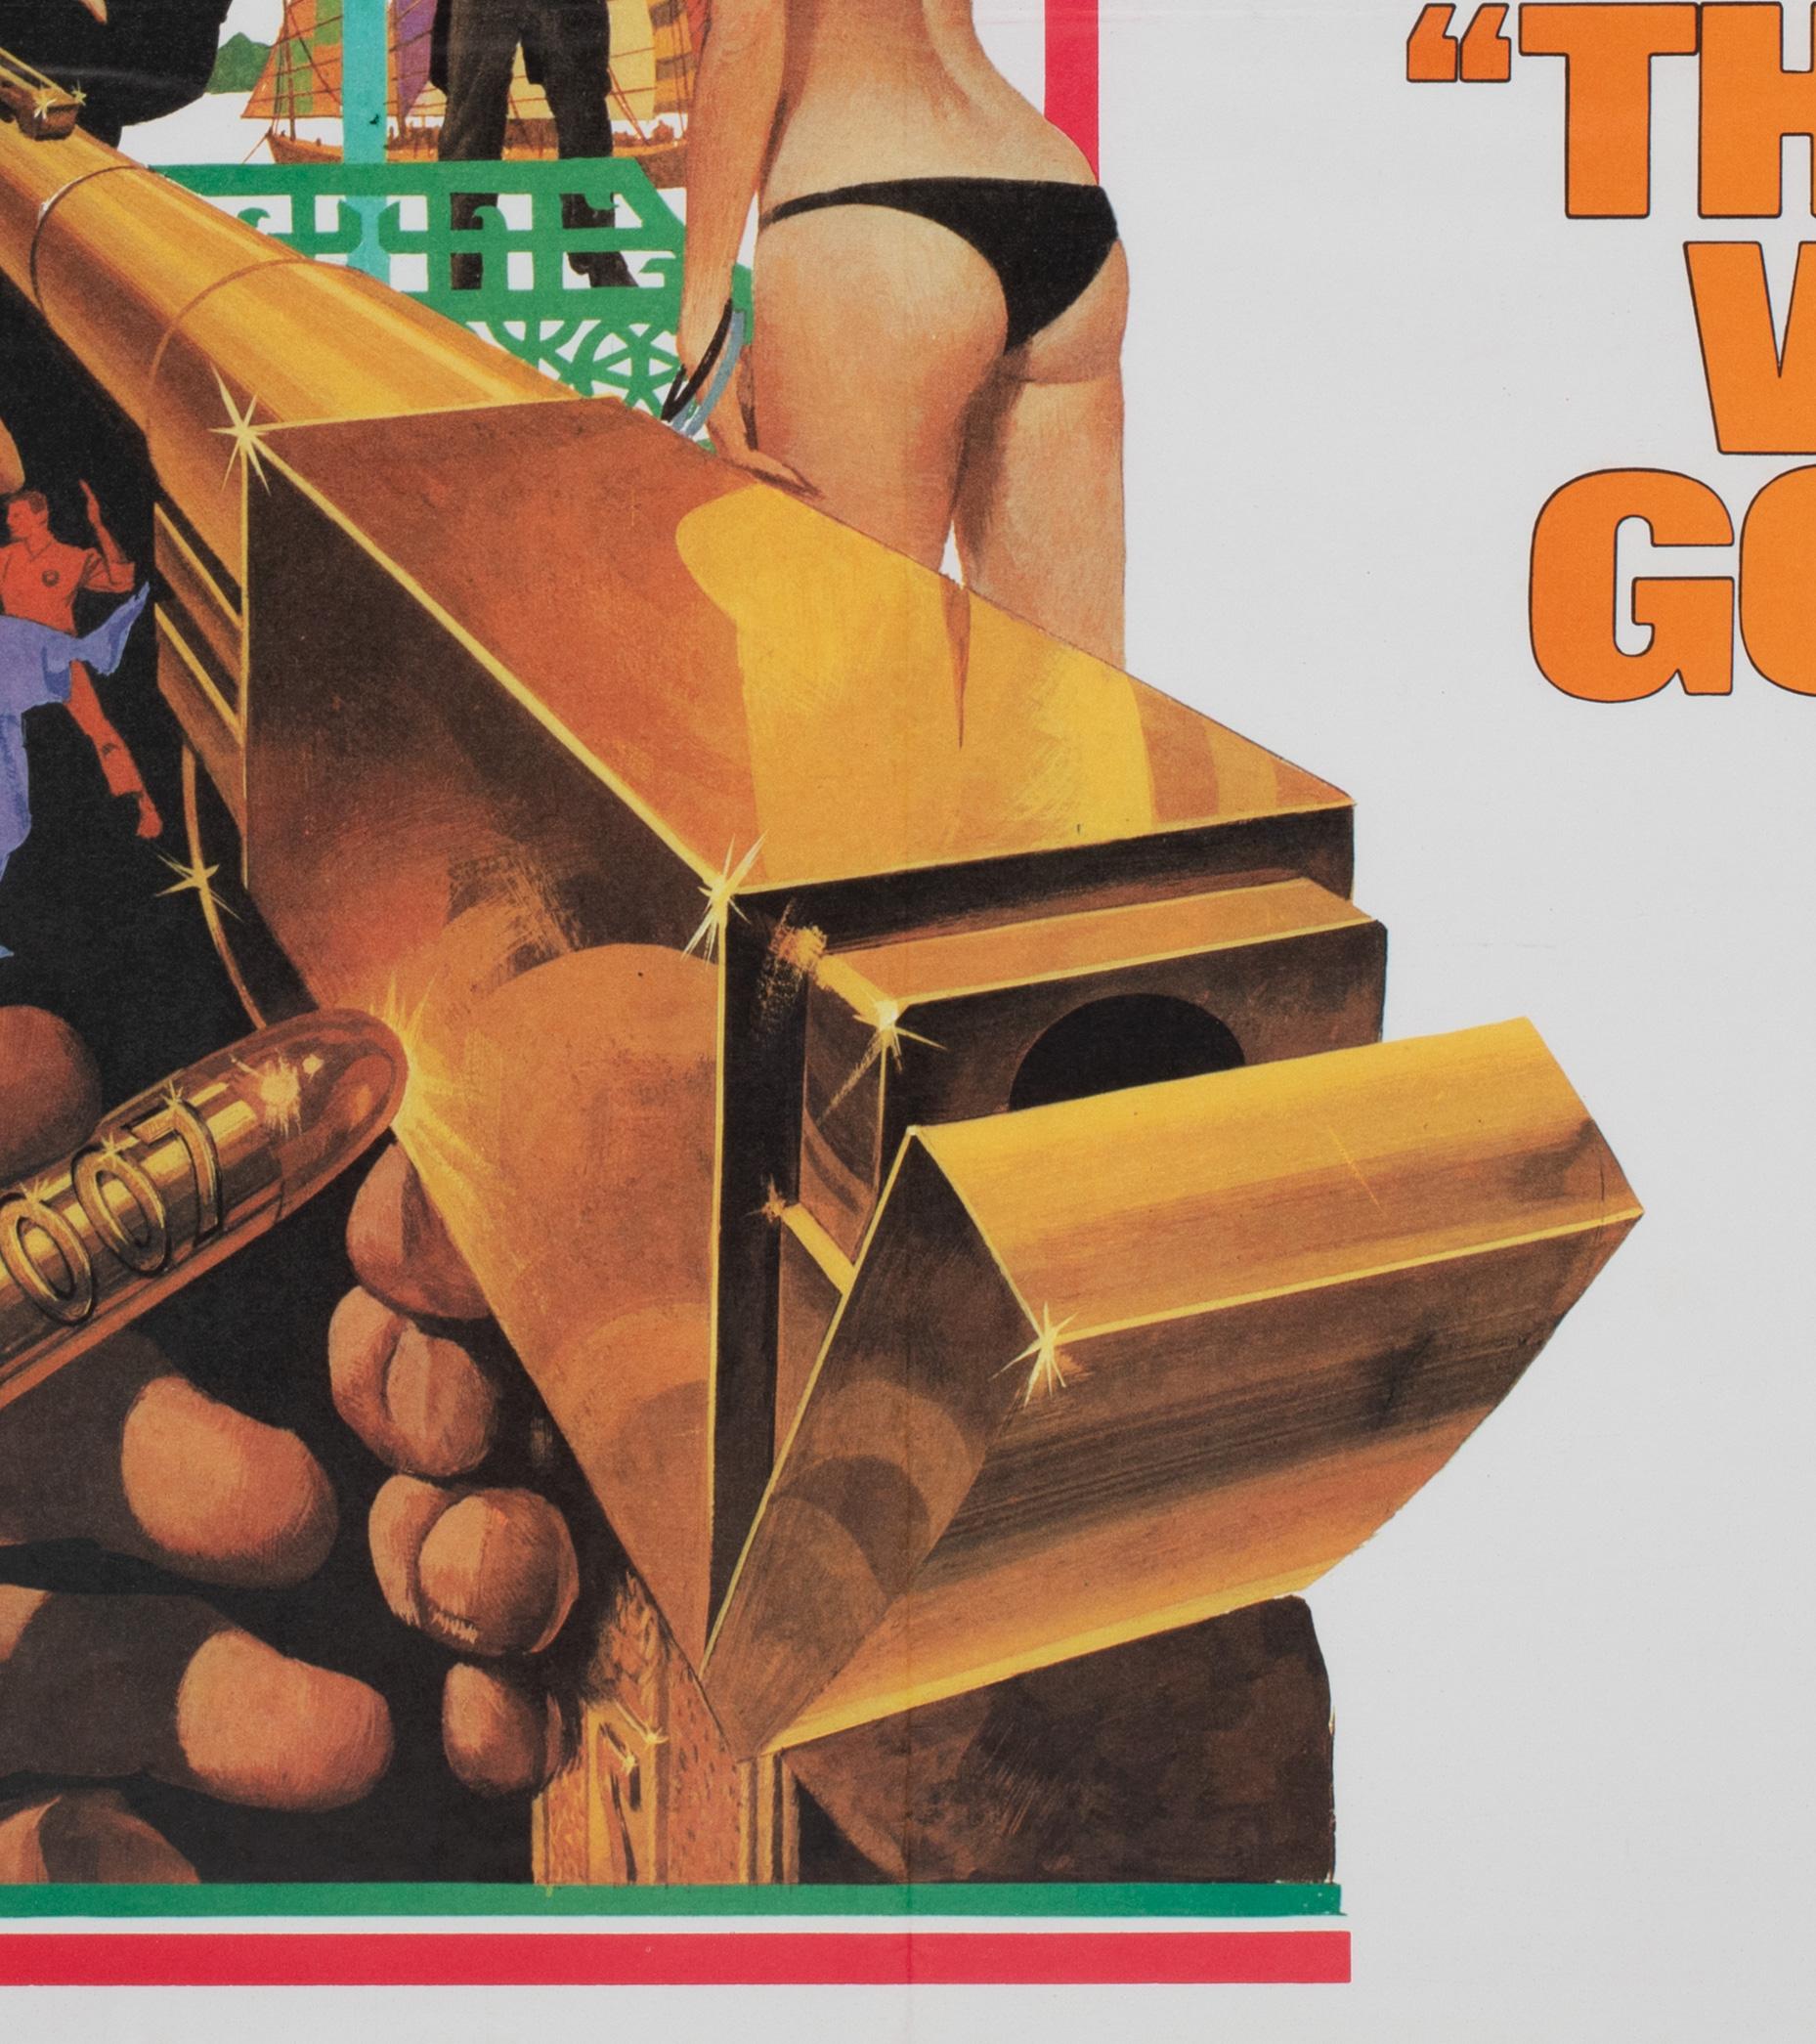 Man with the Golden Gun 1974, James Bond, UK Film Poster, Robert McGinnis For Sale 1